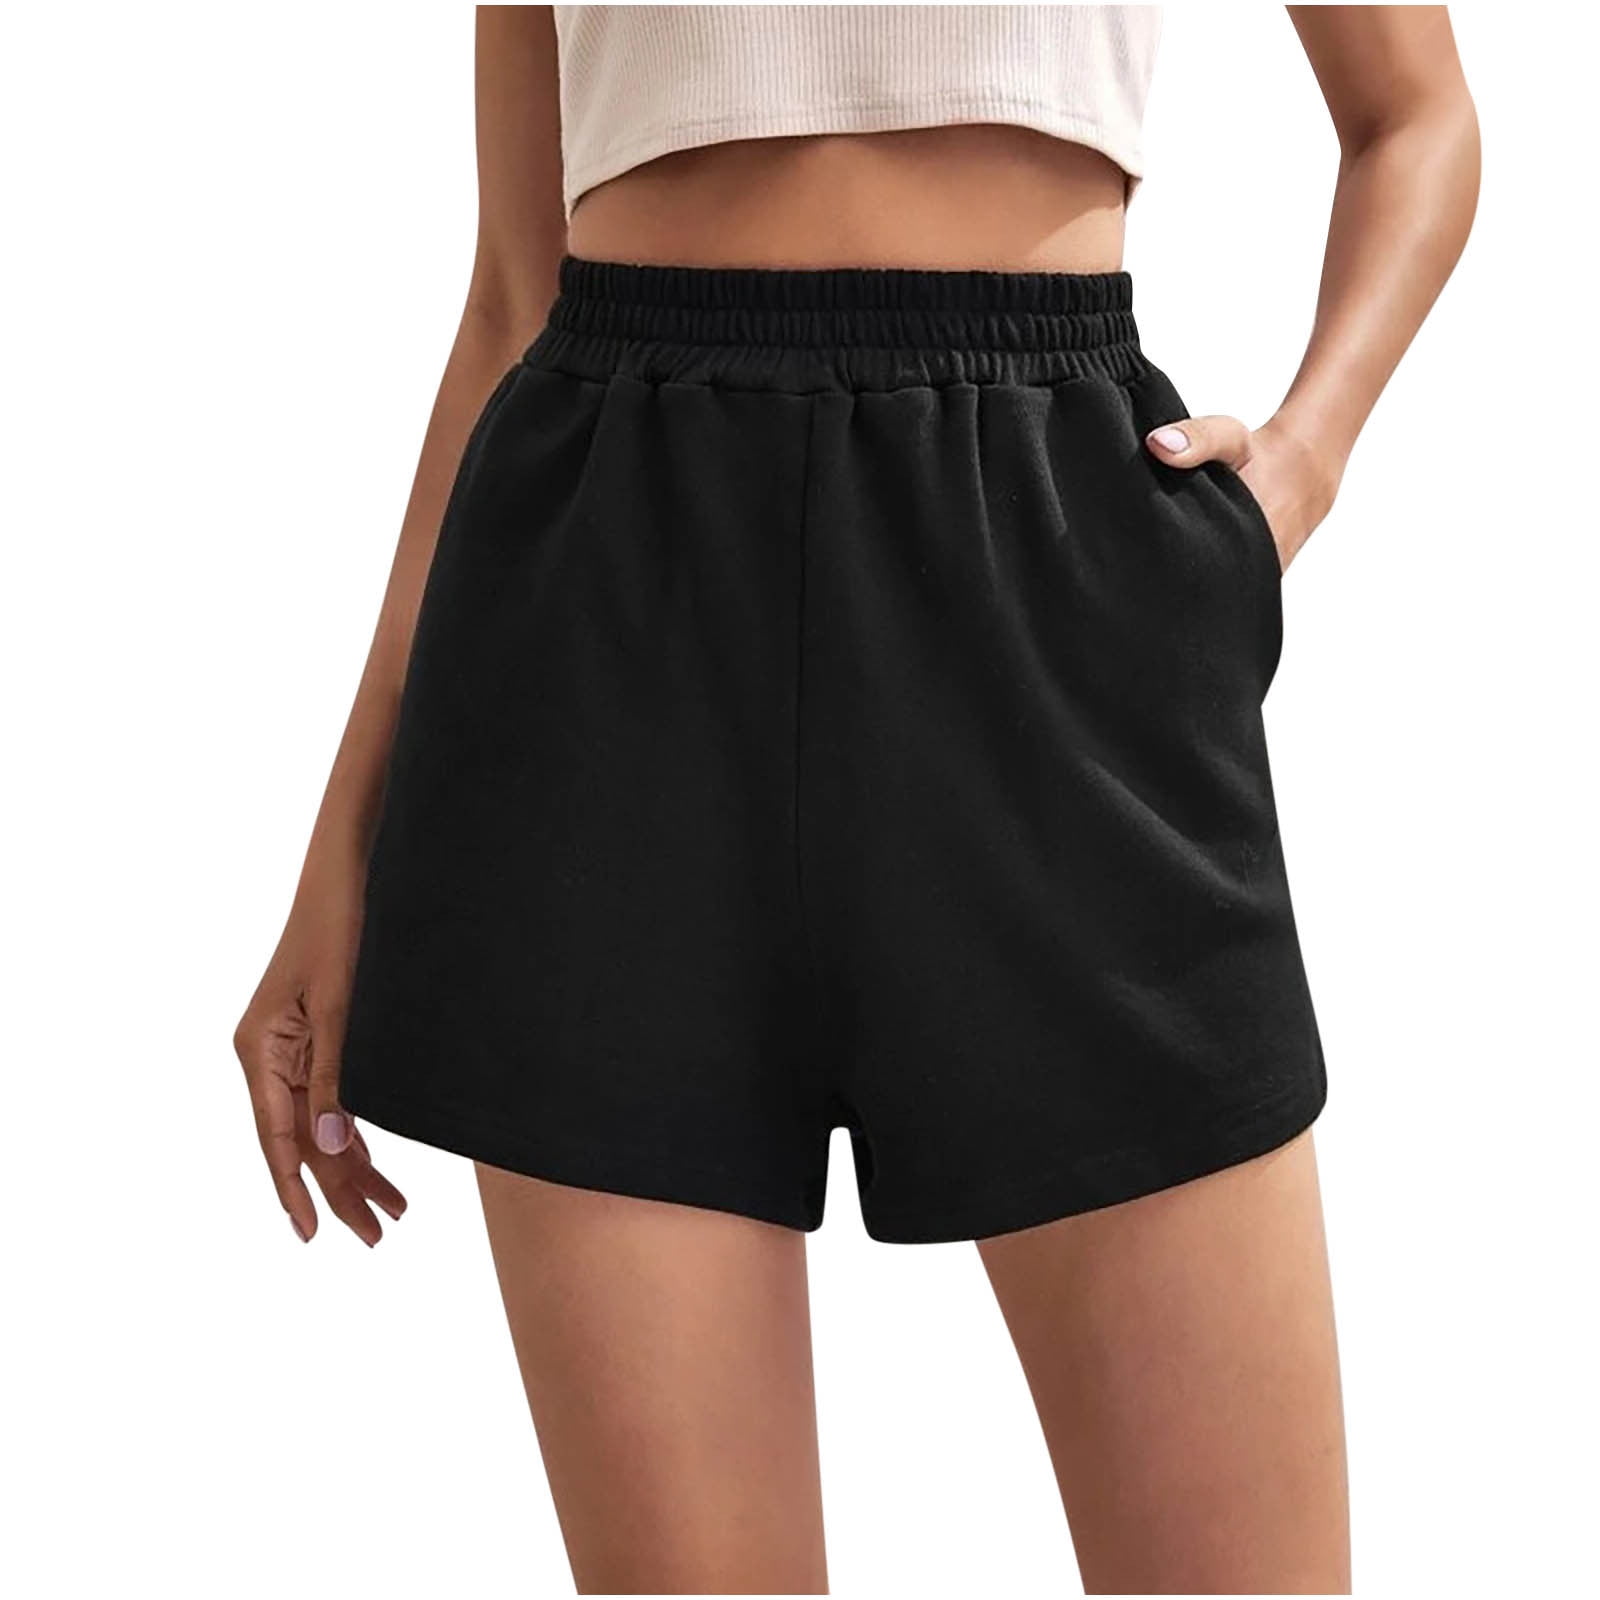 Trendy women's shorts